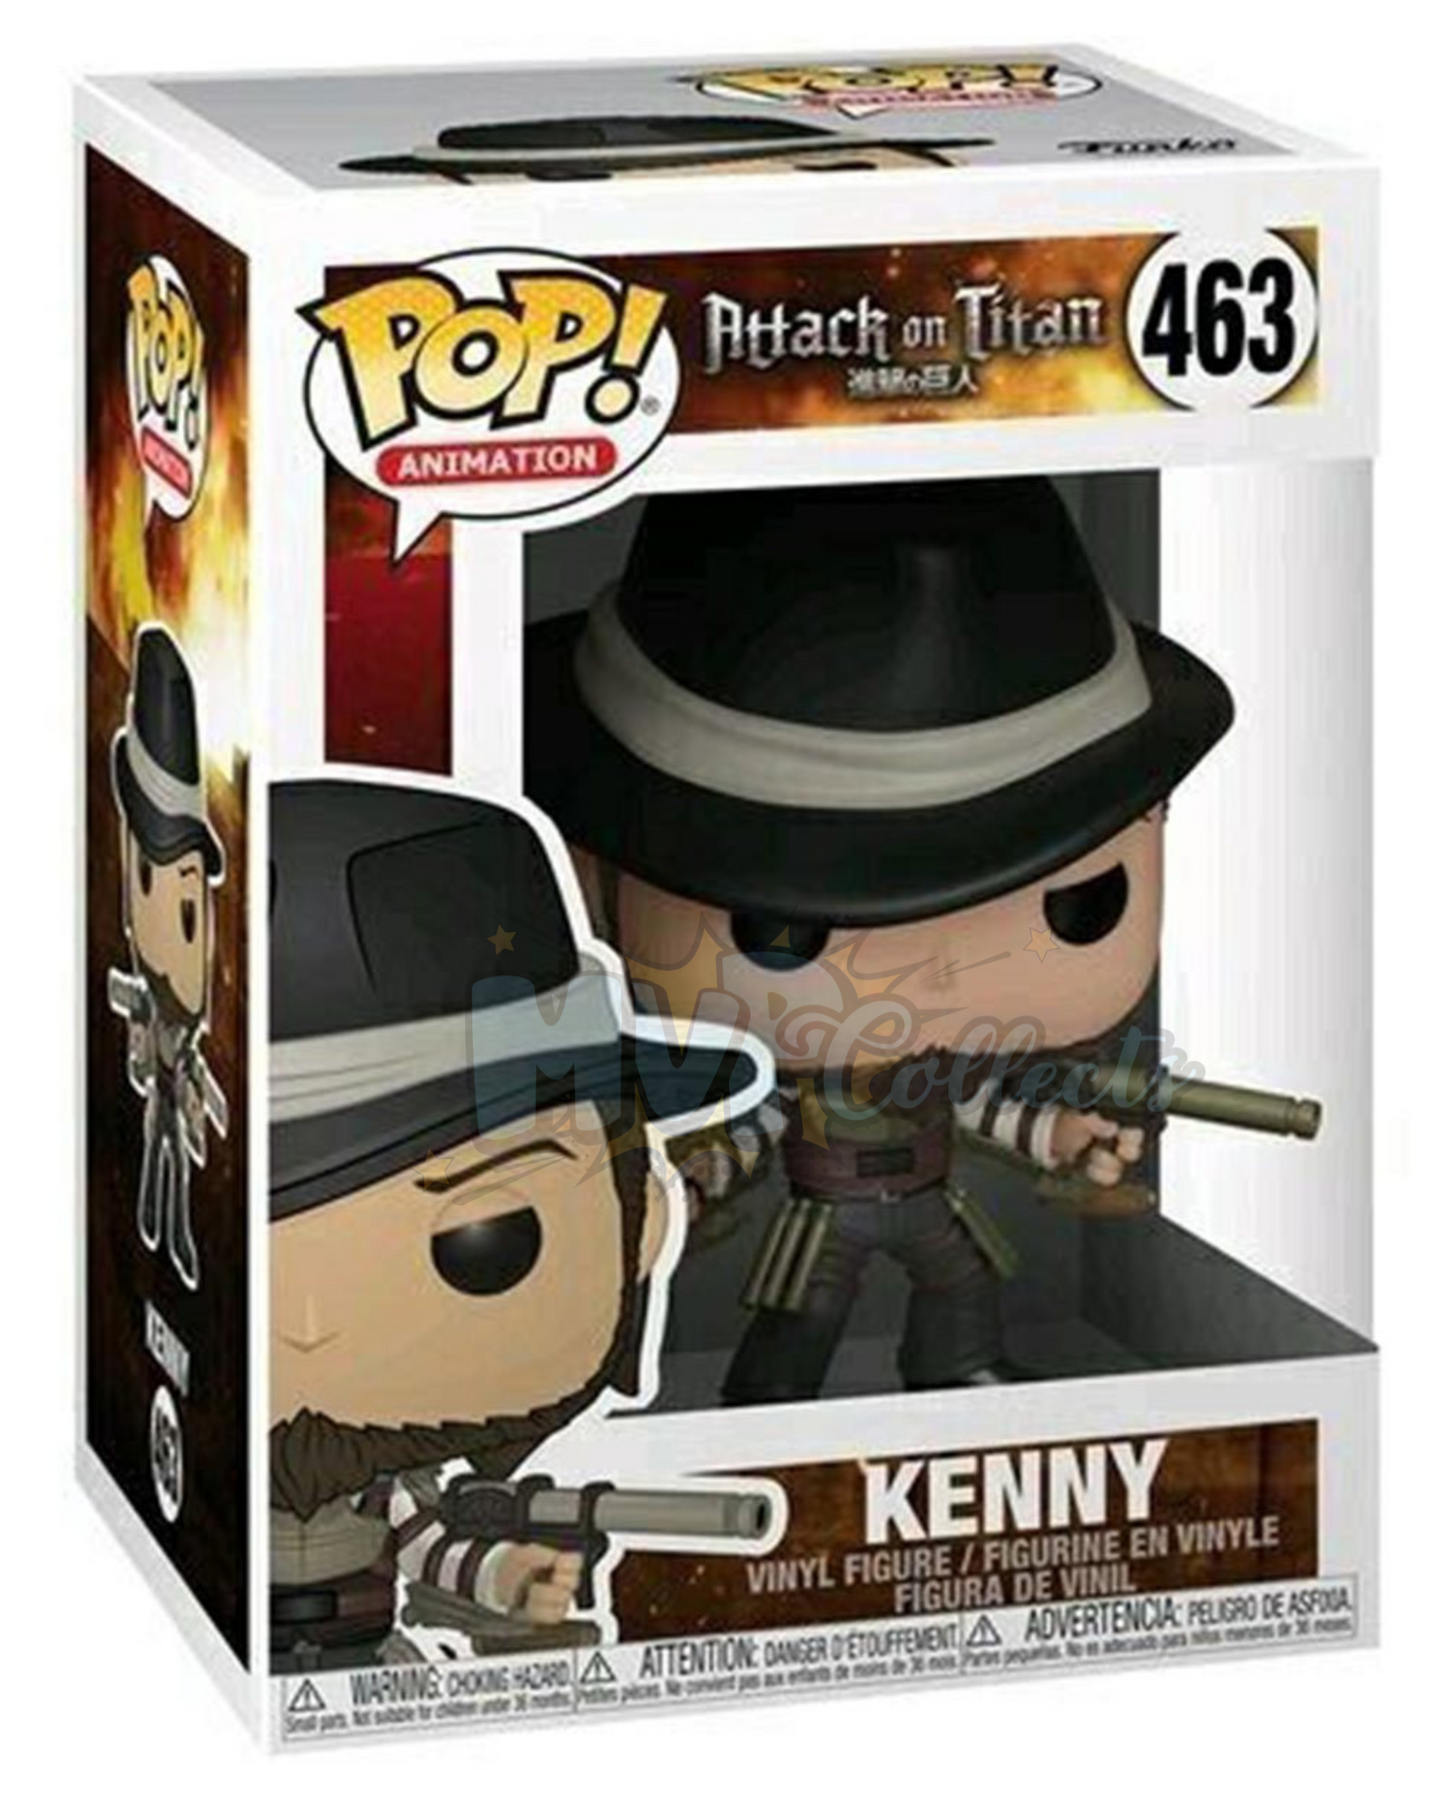 Kenny POP! Attack on Titan 463